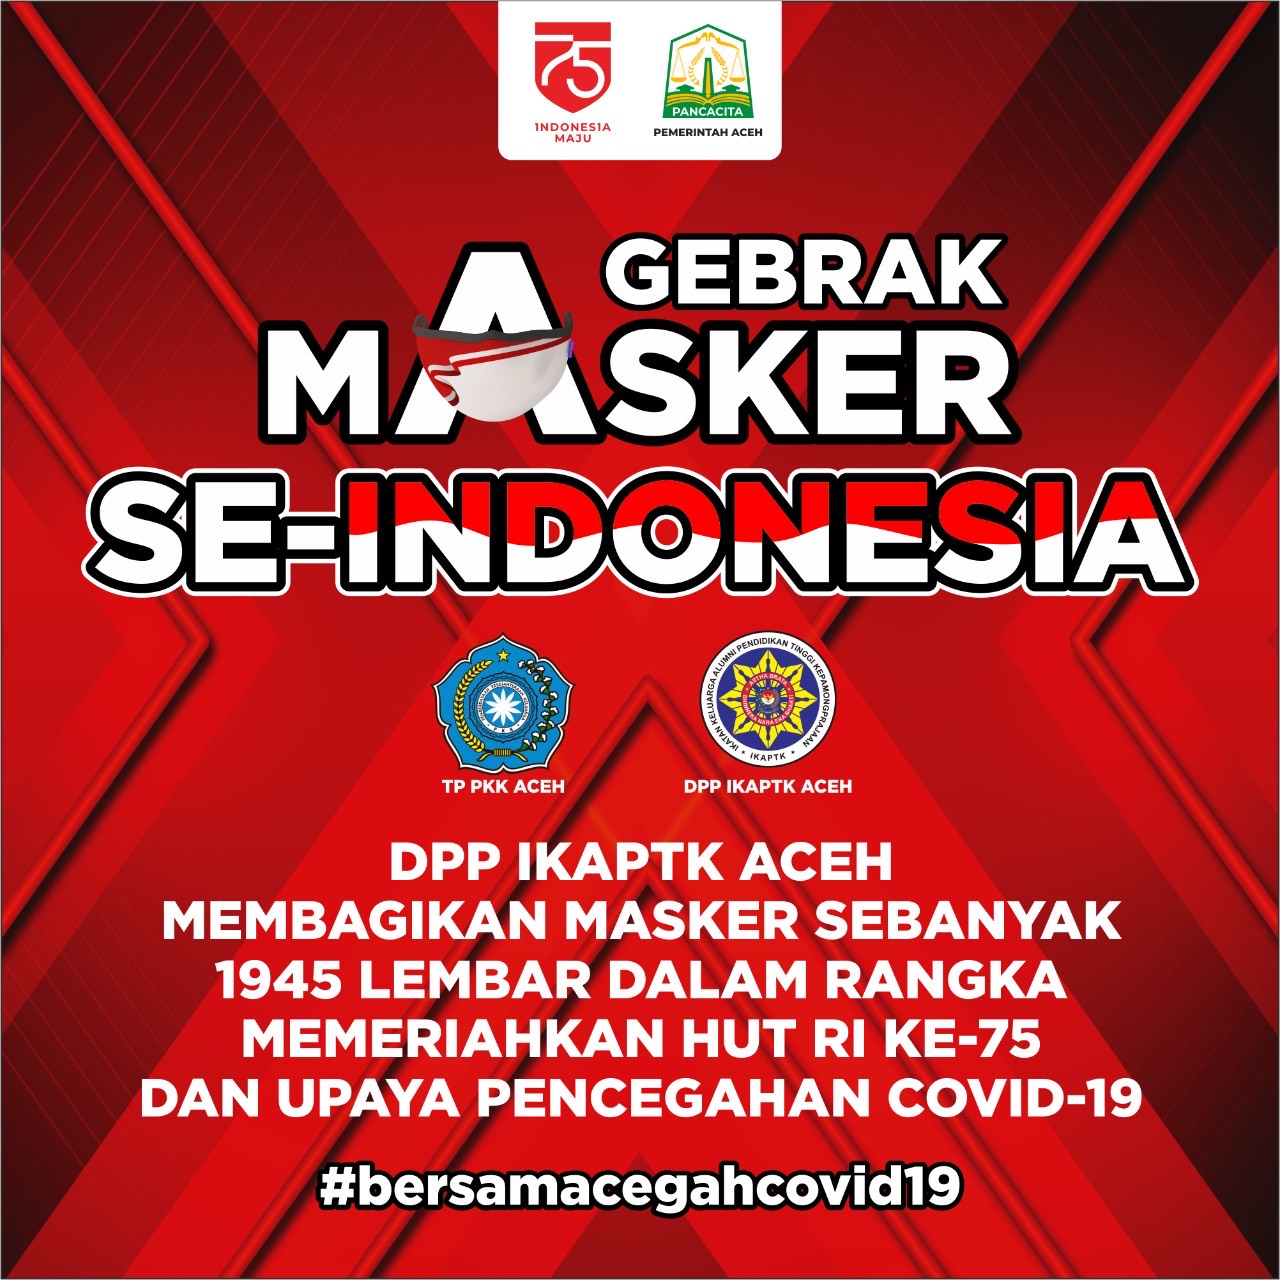 Peringati Hari Kemerdekaan, IKAPTK Aceh bagikan 1.945 Masker